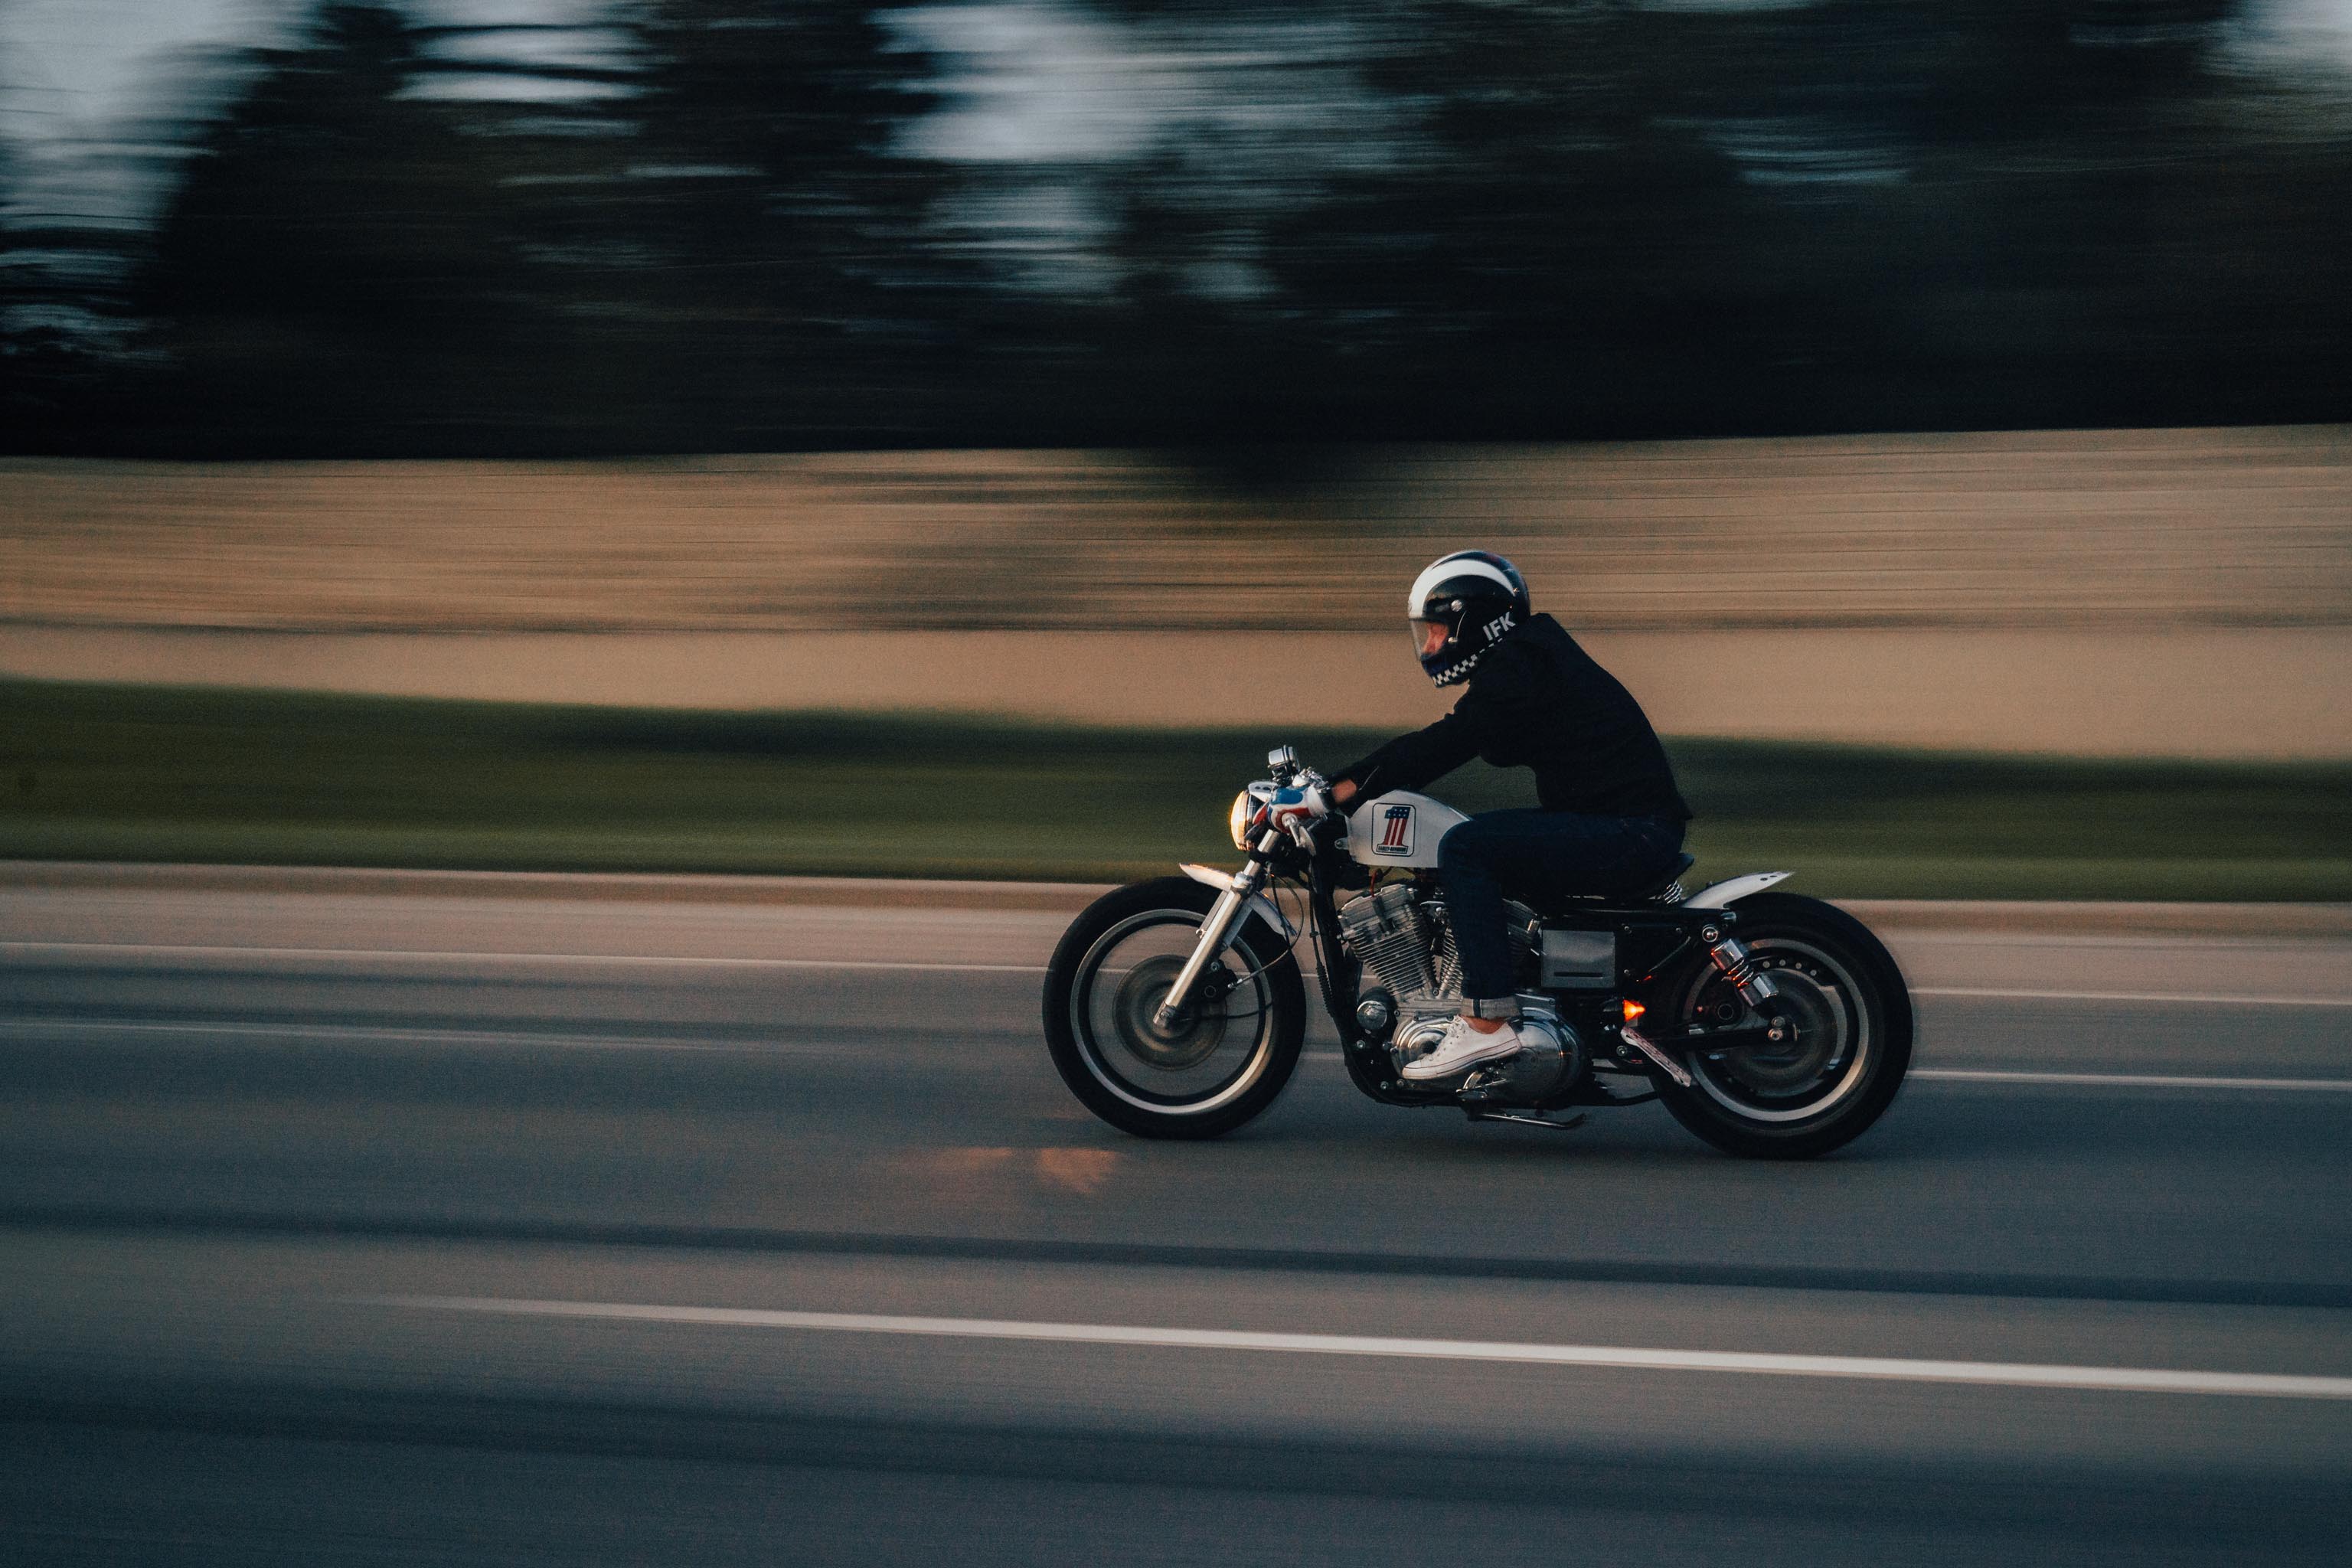 Alberta motorcycle photographer Karl Lee Photography 